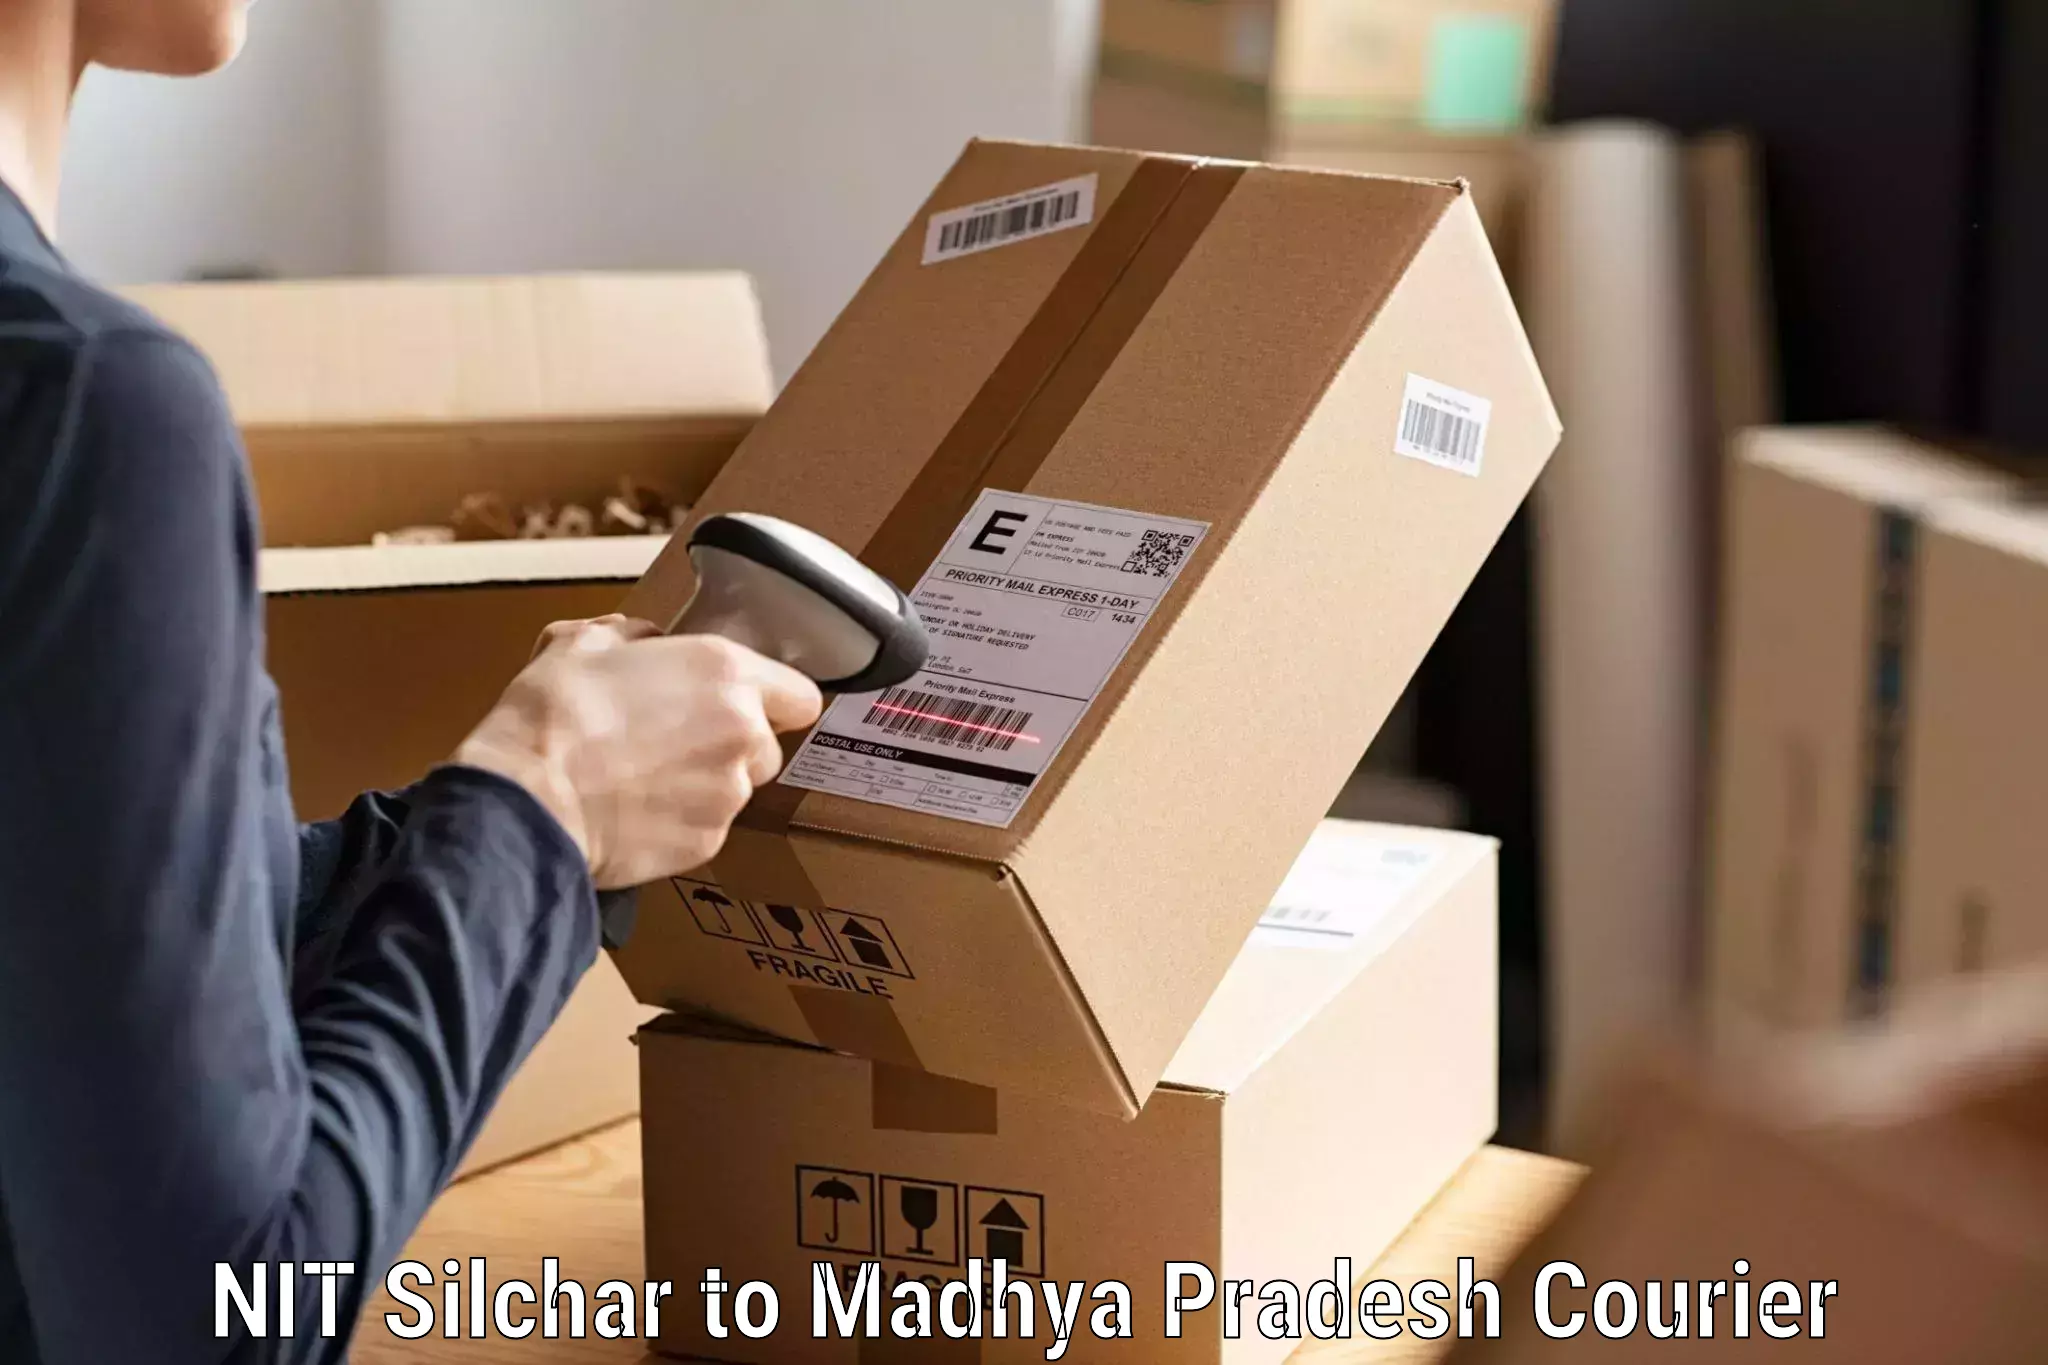 Express delivery network NIT Silchar to Vidisha